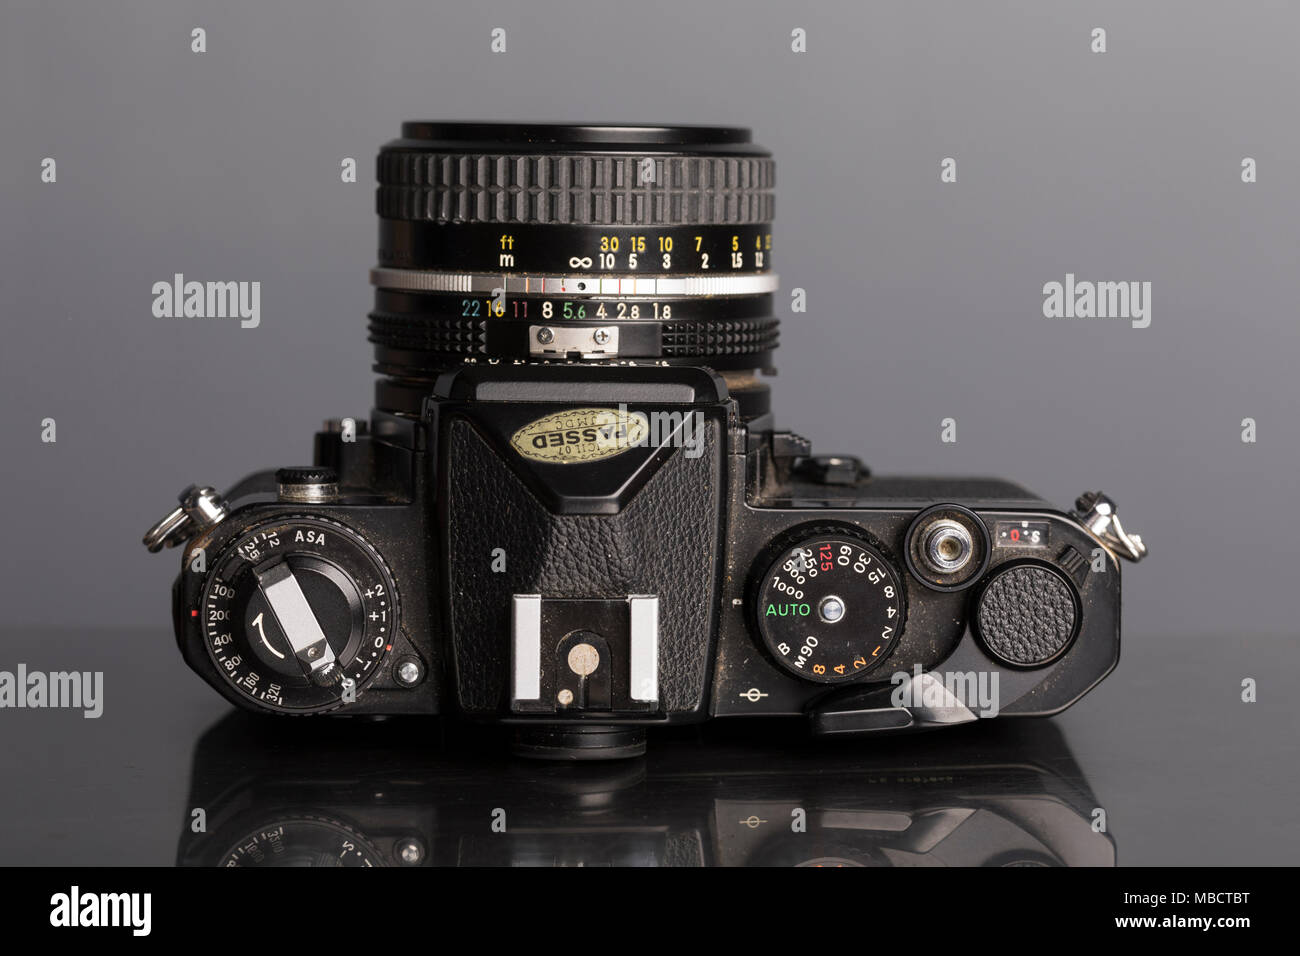 Nikon FE 35mm SLR single lens reflex film camera with 50mm f1.8 Nikkor lens Stock Photo